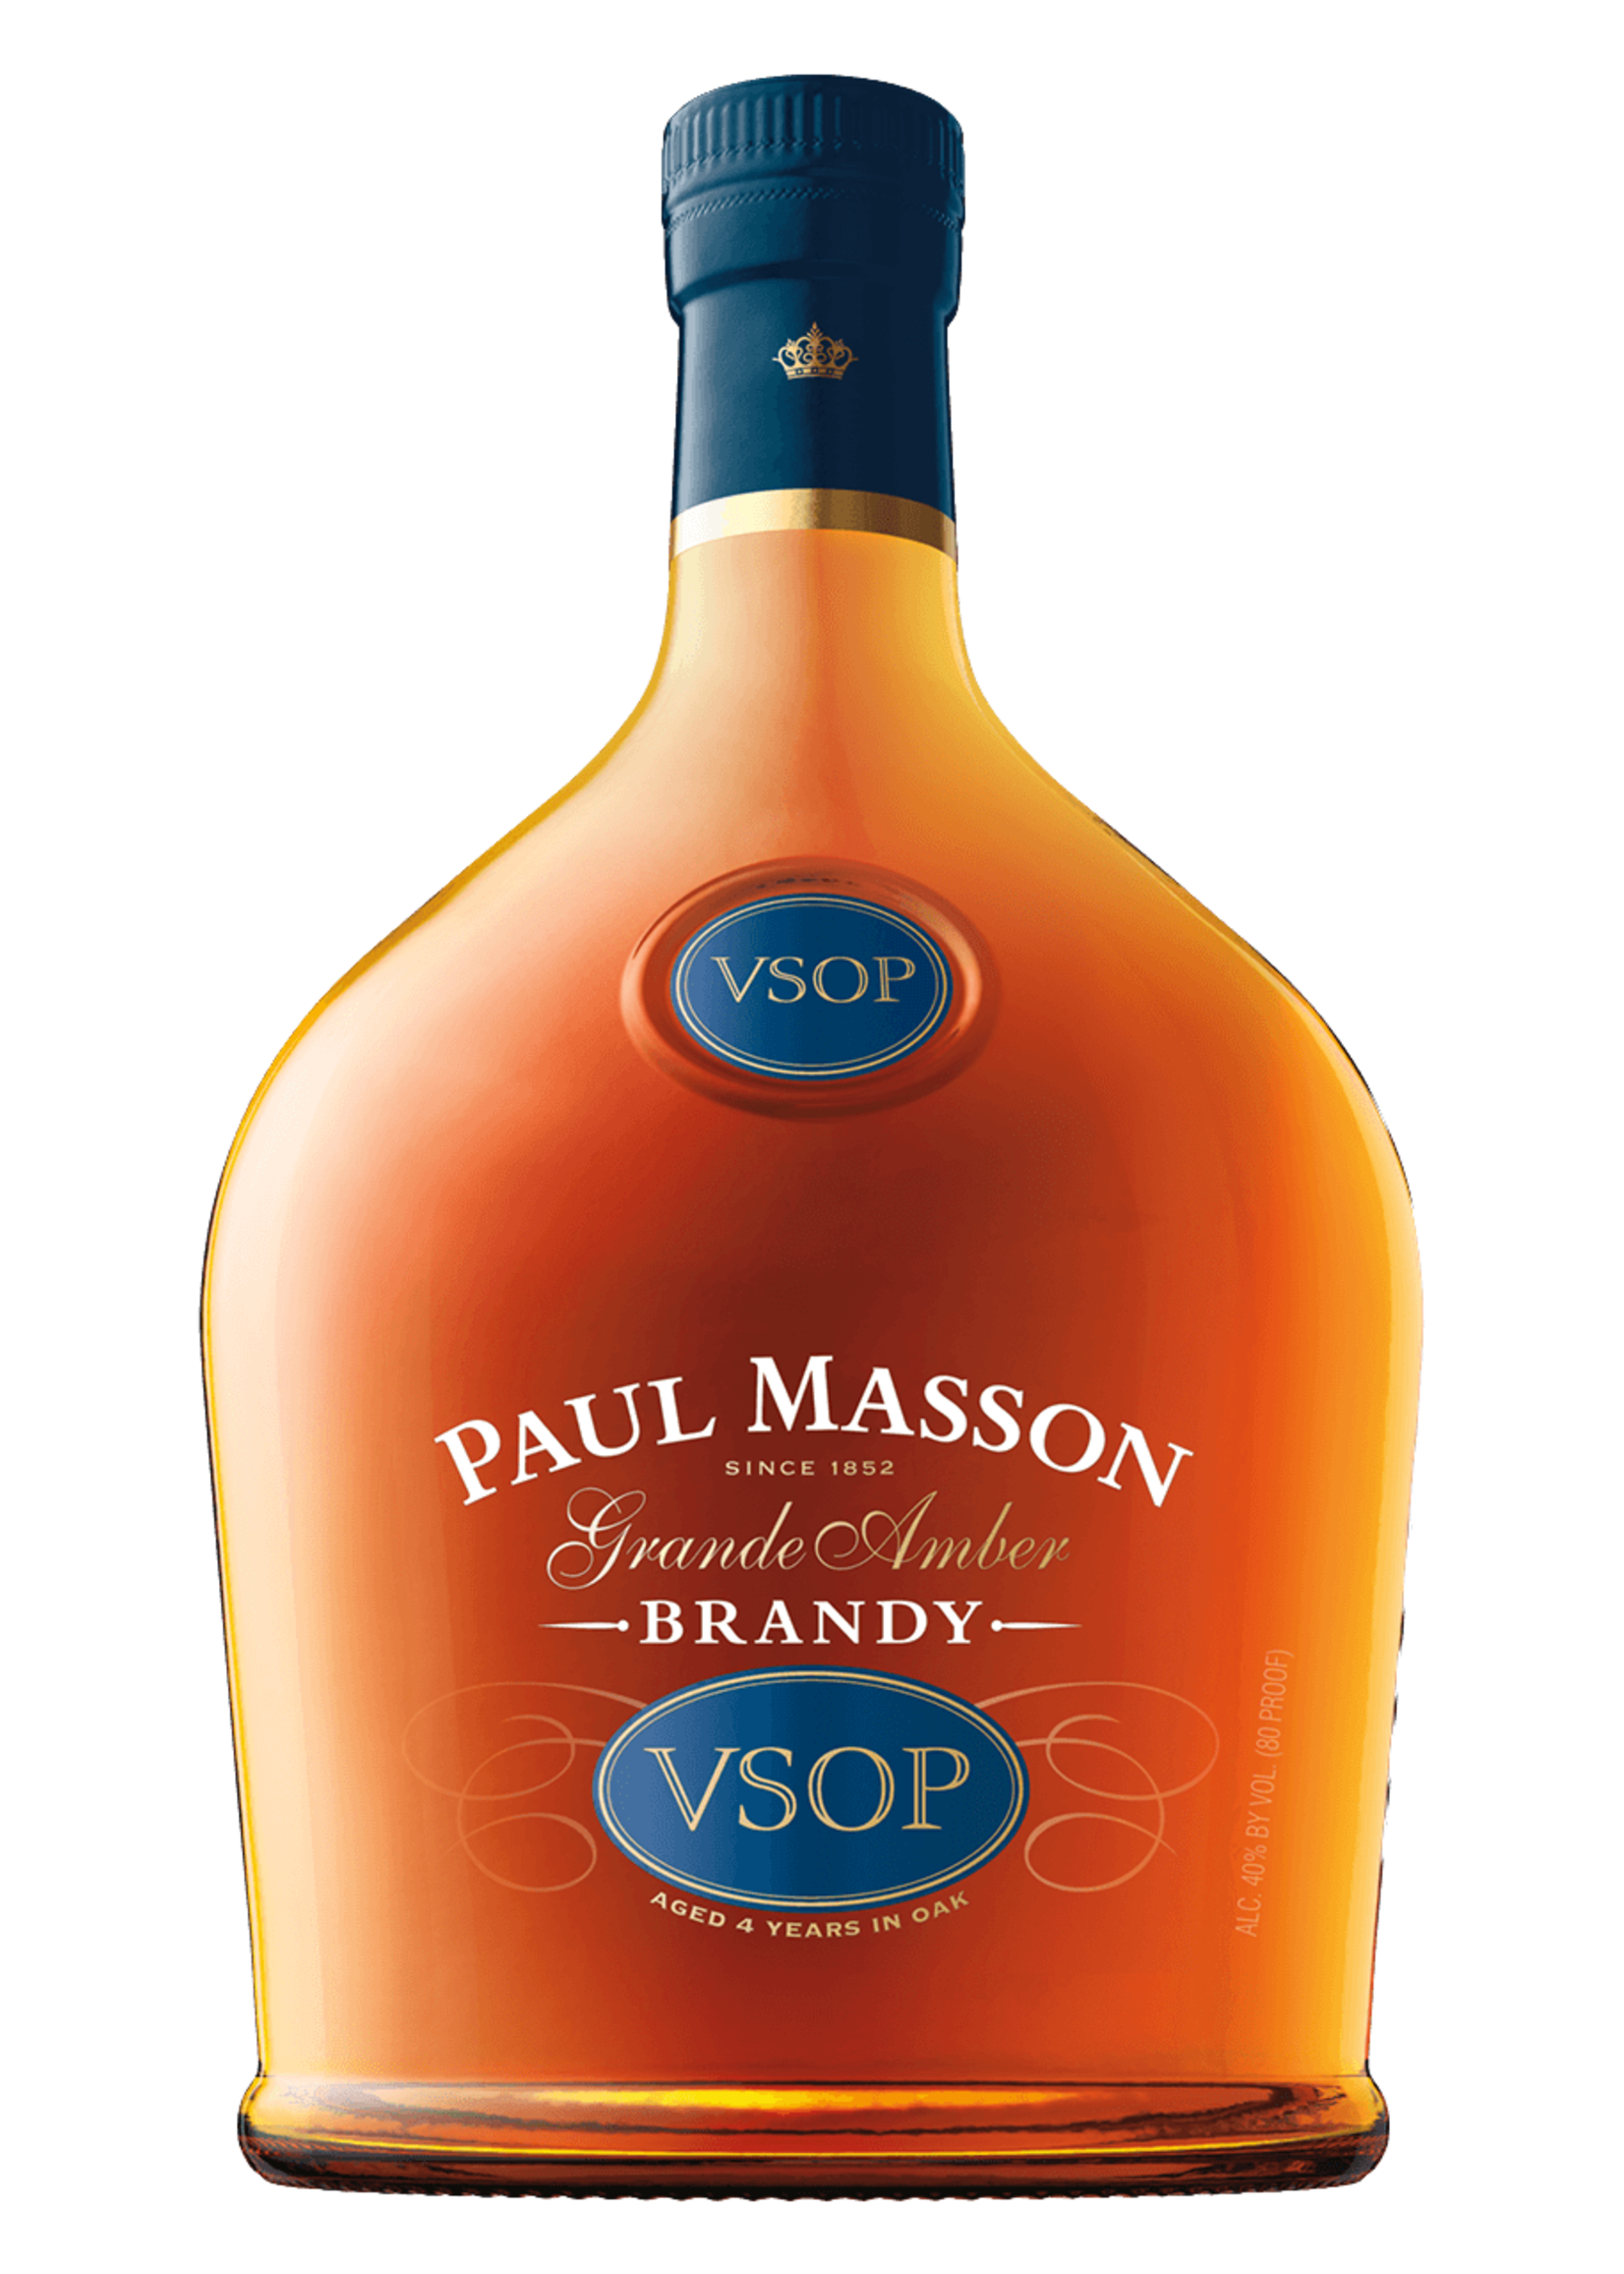 Paul Masson Paul Masson / Brandy VSOP